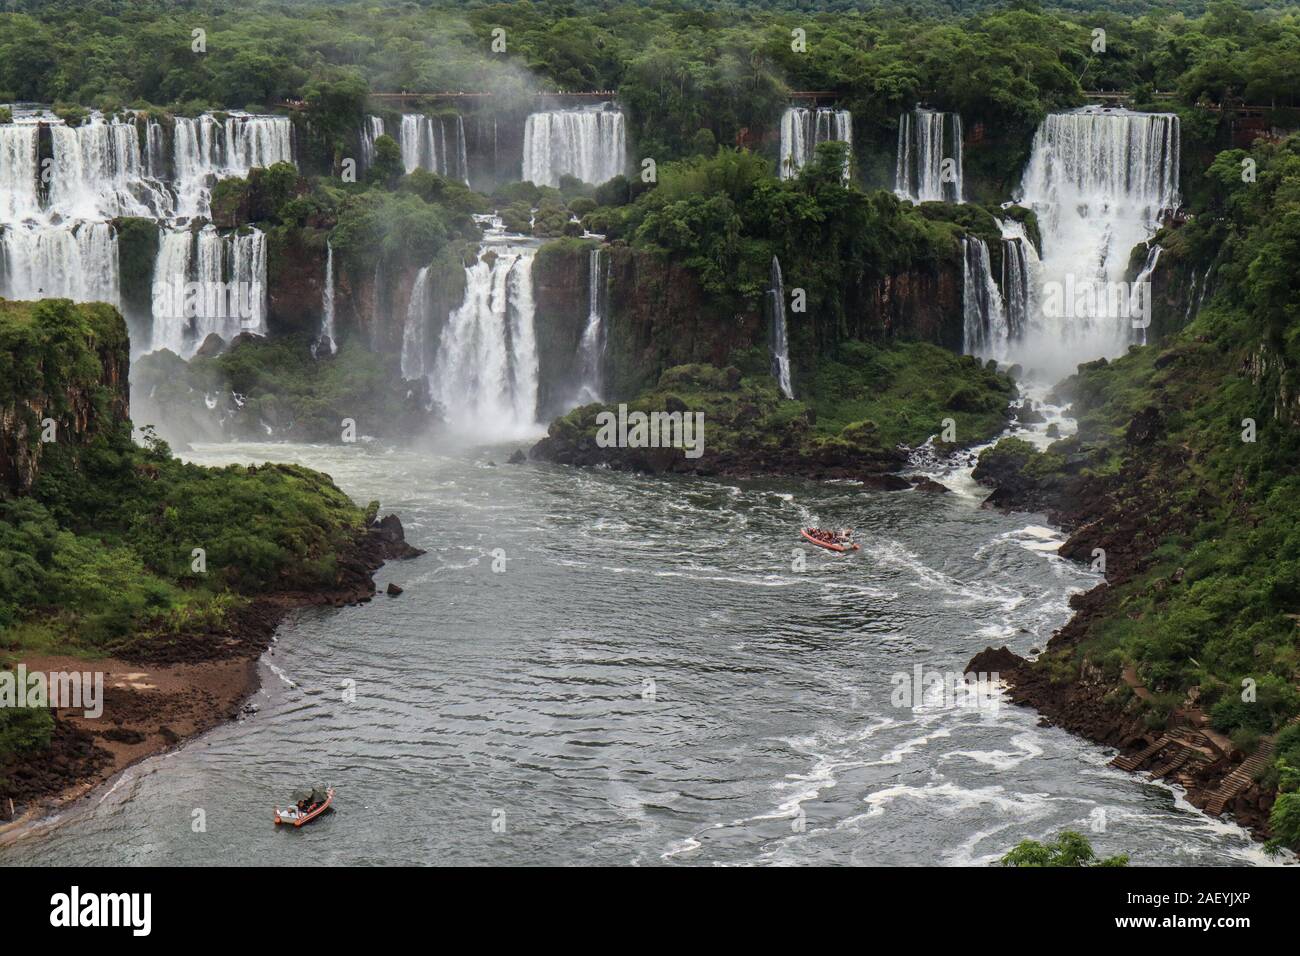 IGUAZU, 05.12.2019: View of Iguazu Falls, brazilian and argentinian side with some native species of fauna and flora (Néstor J. Beremblum / Alamy) Stock Photo